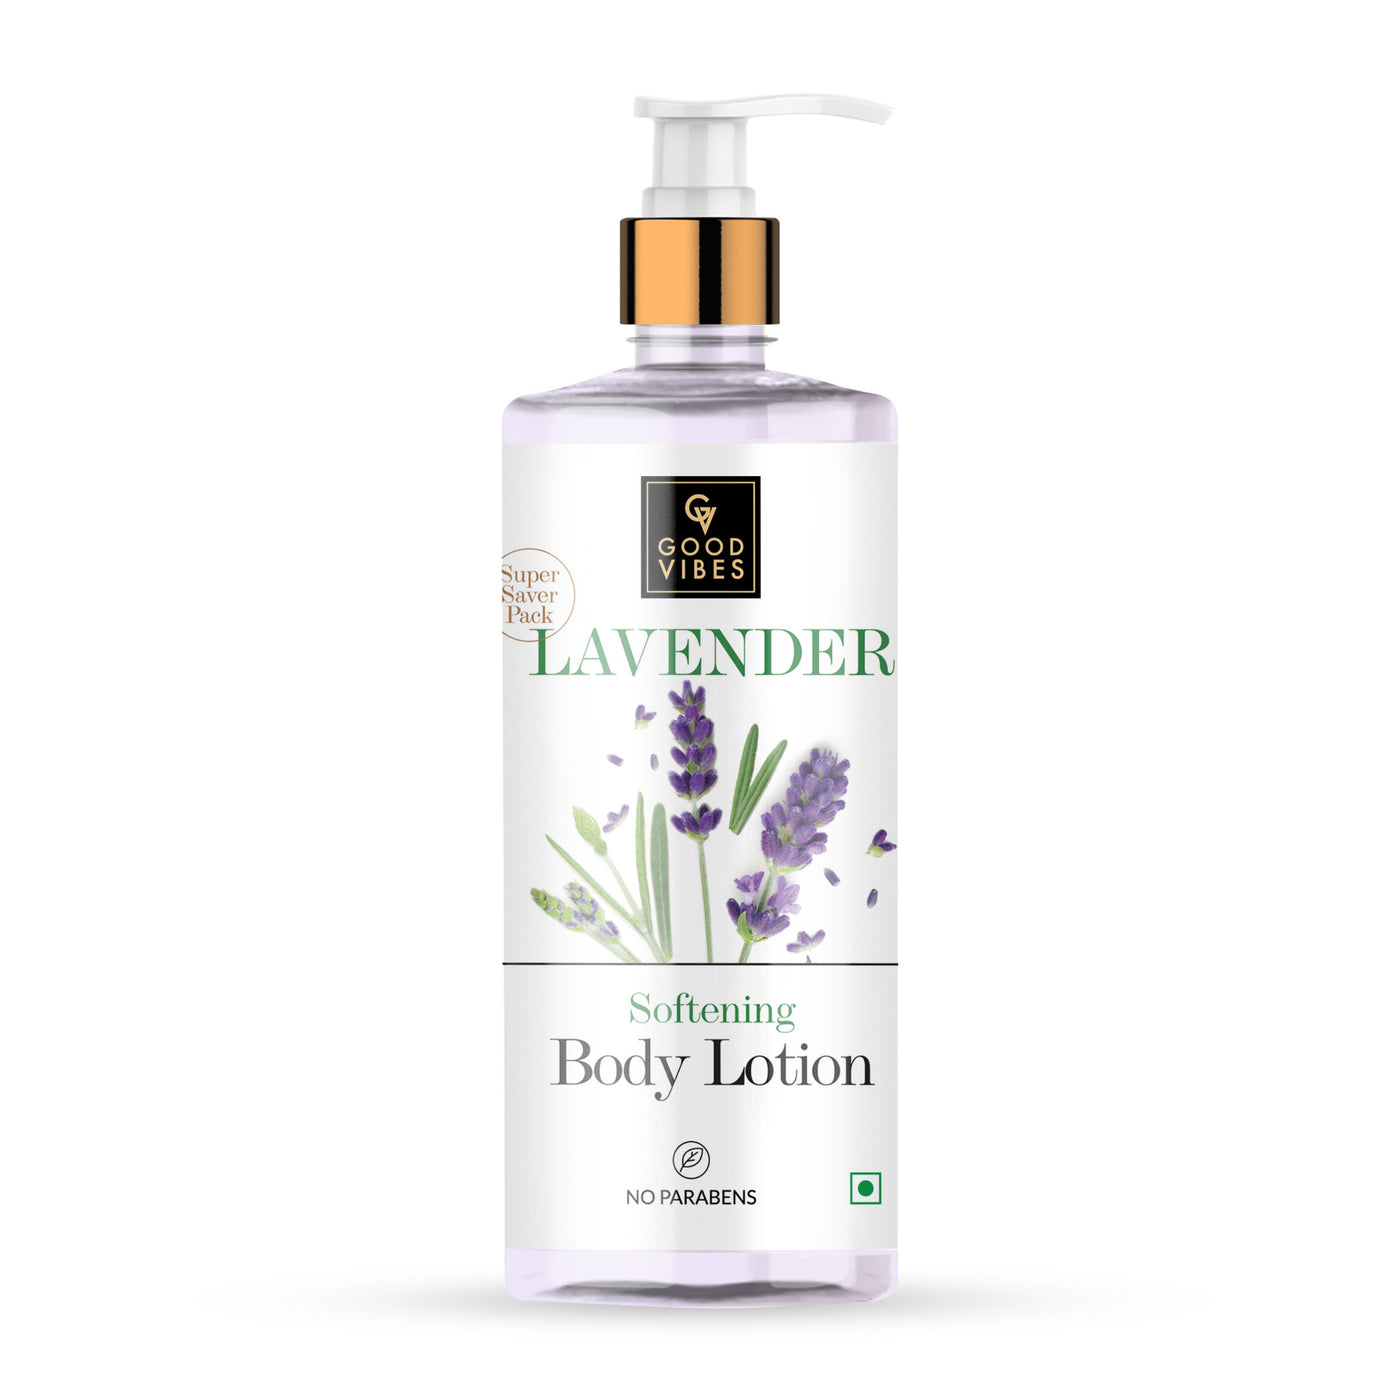 good-vibes-lavender-softening-body-lotion-400ml-100-ml-free-1-16-91-7